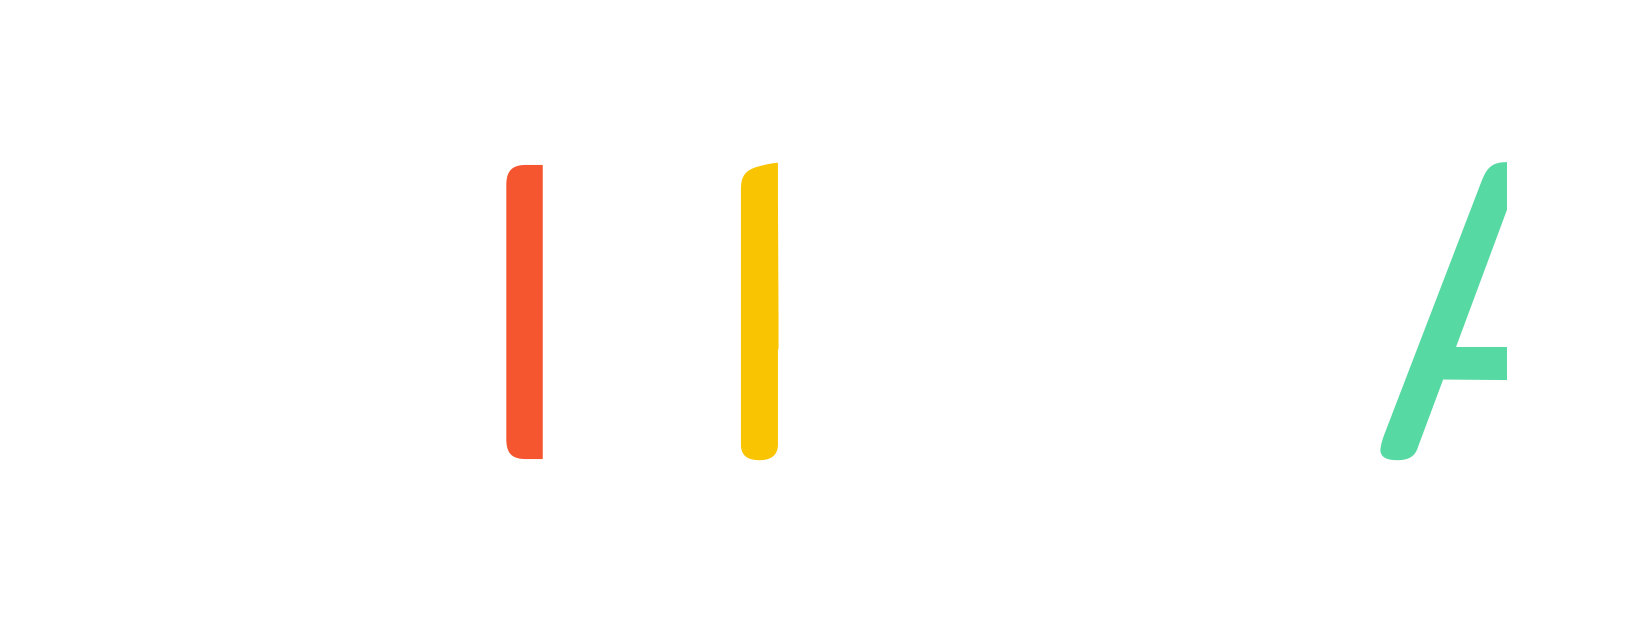 erica-logo